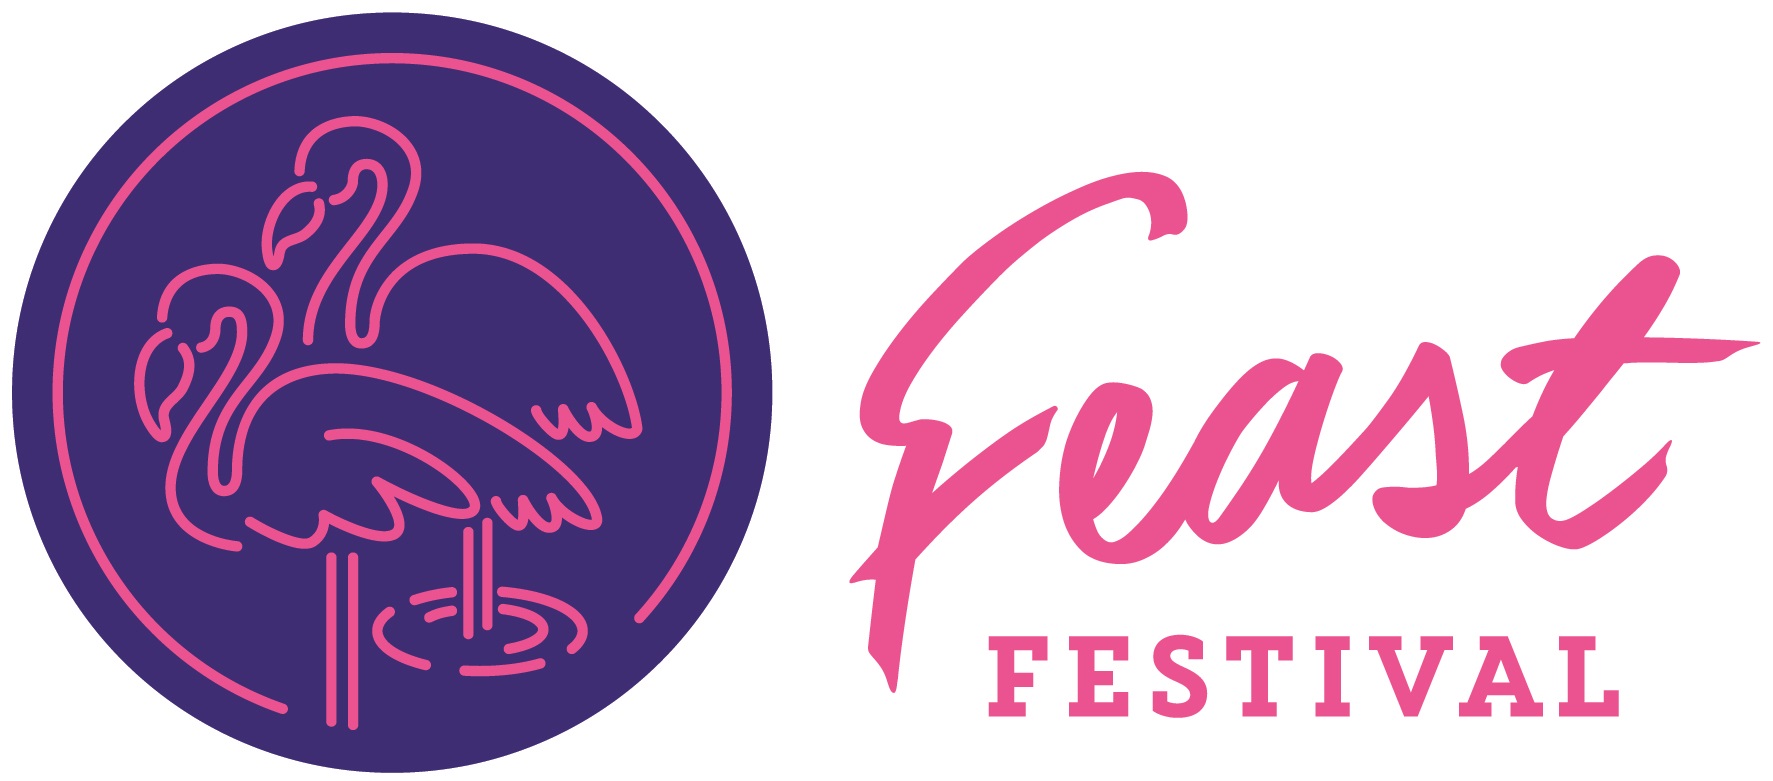 Feast Festival Logo